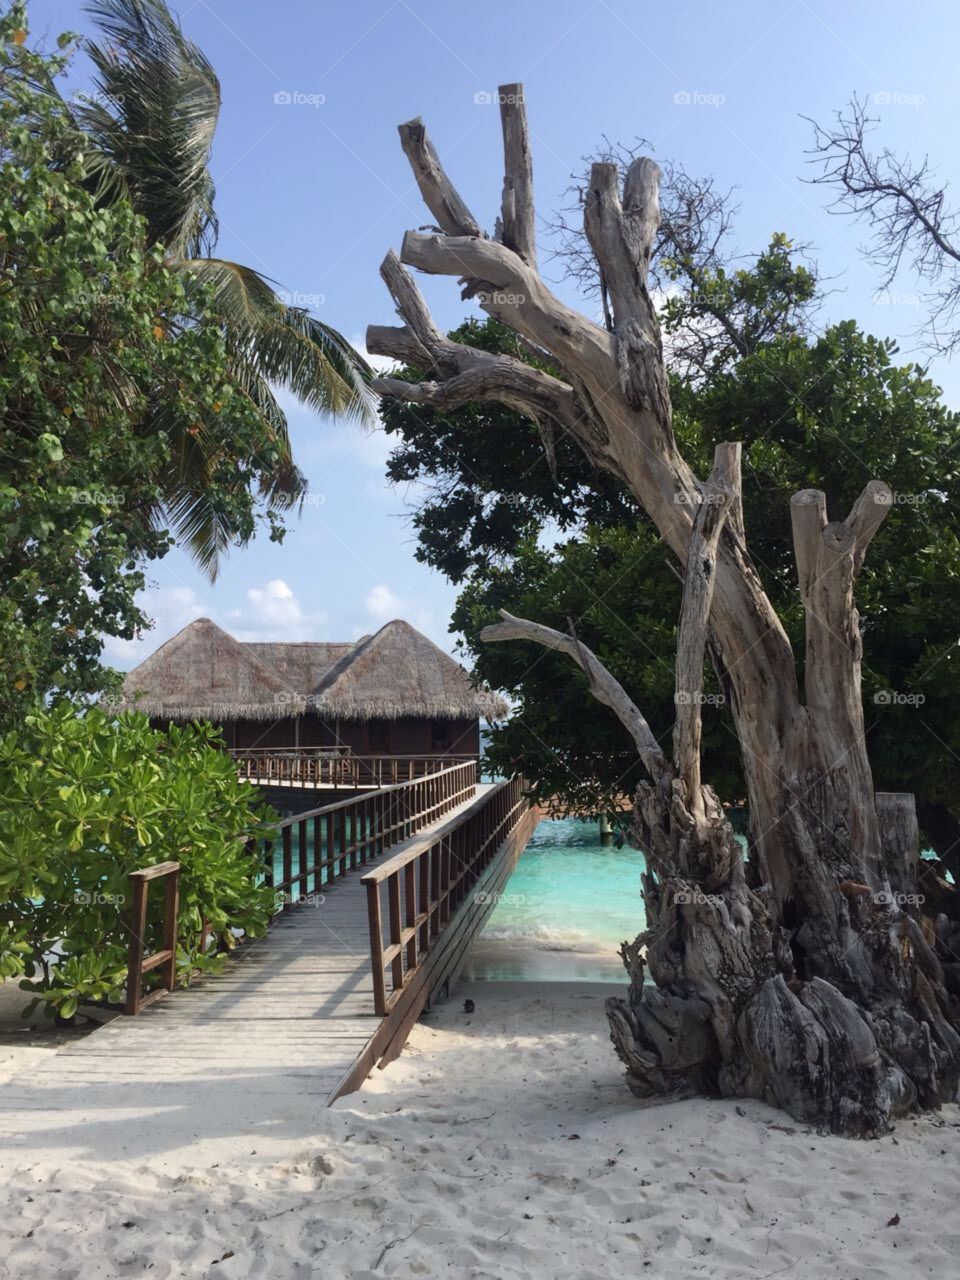 Malediven Strand Urlaub Vacation Holiday Beach Hotel Brücke Bridge Pflanzen Plants Palmen Palms blau grün